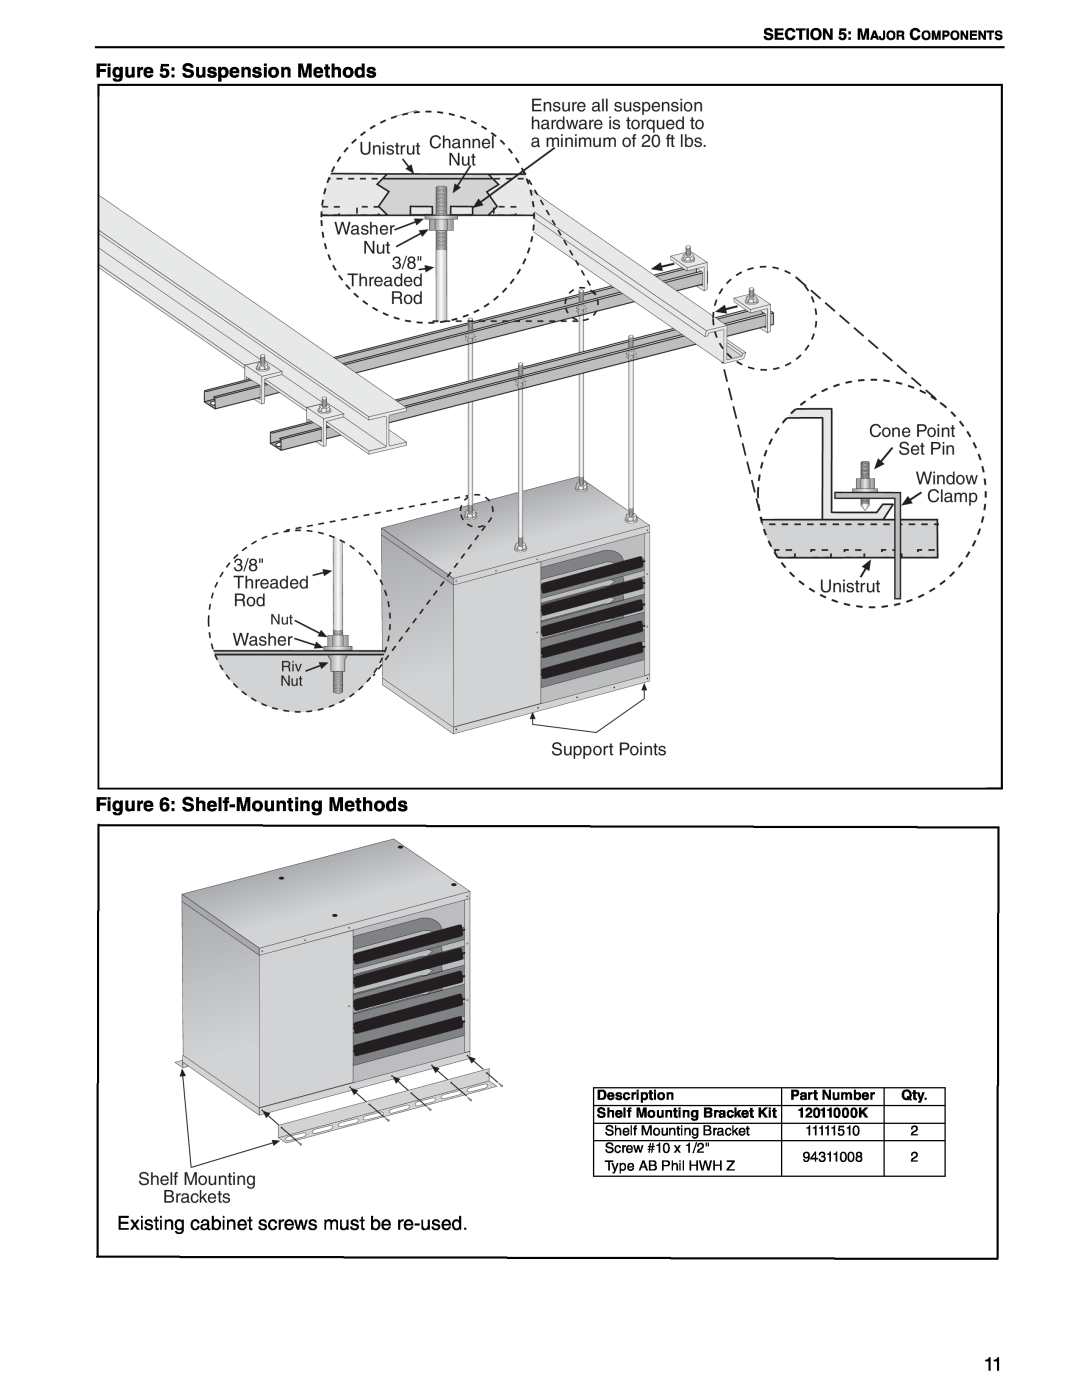 Roberts Gorden UHA[X][S] 75 Suspension Methods, Shelf-MountingMethods, Existing cabinet screws must be re-used 